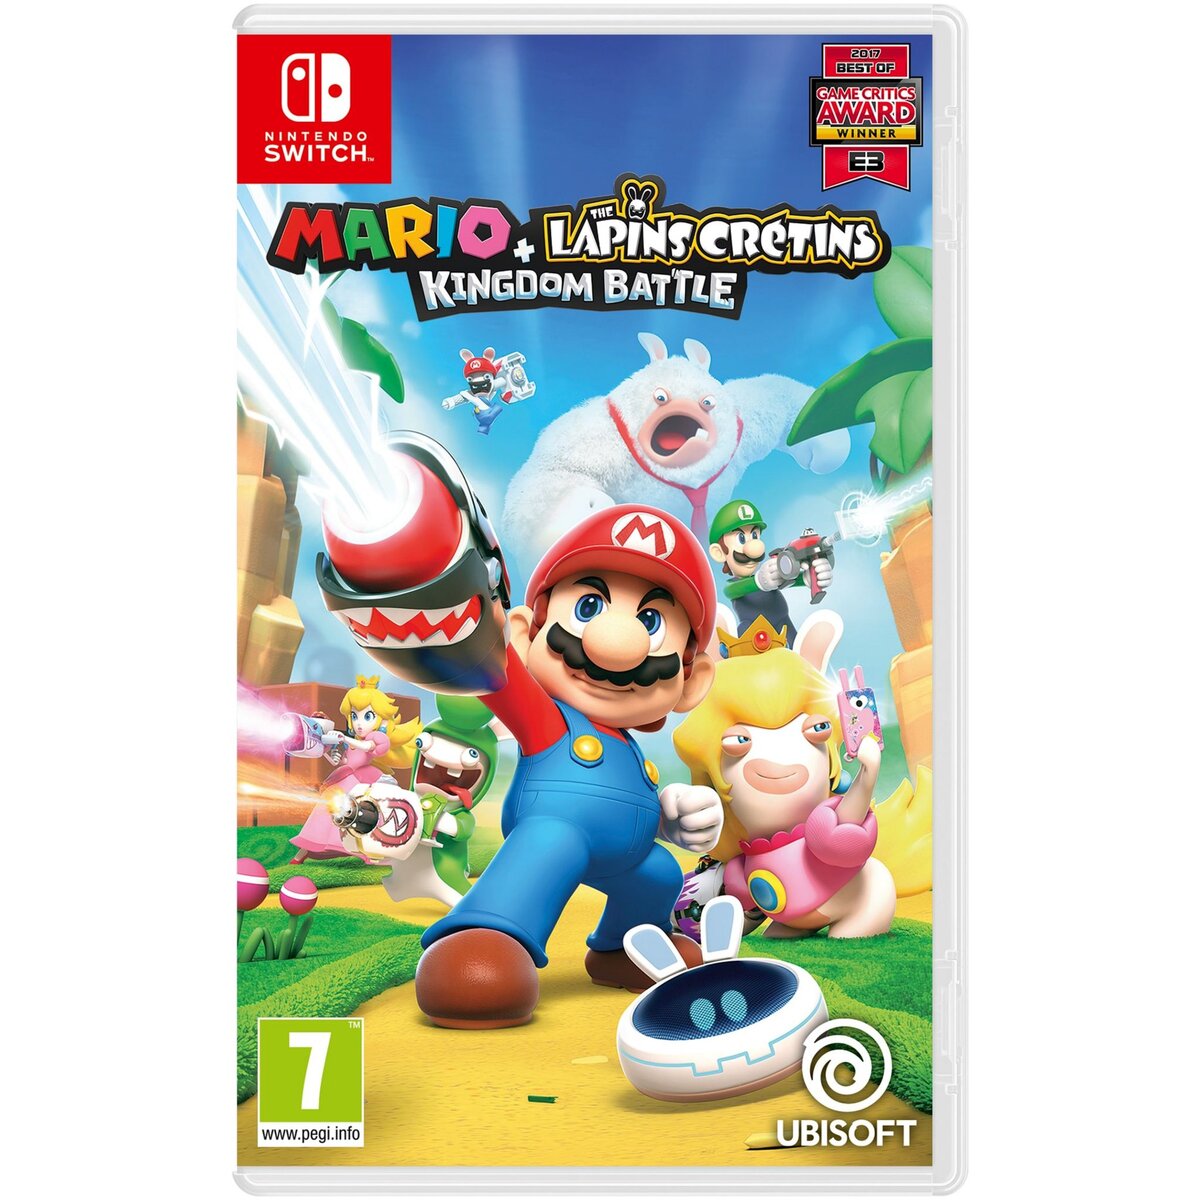 Mario + The Lapins Crétins Kingdom Battle Nintendo SWITCH